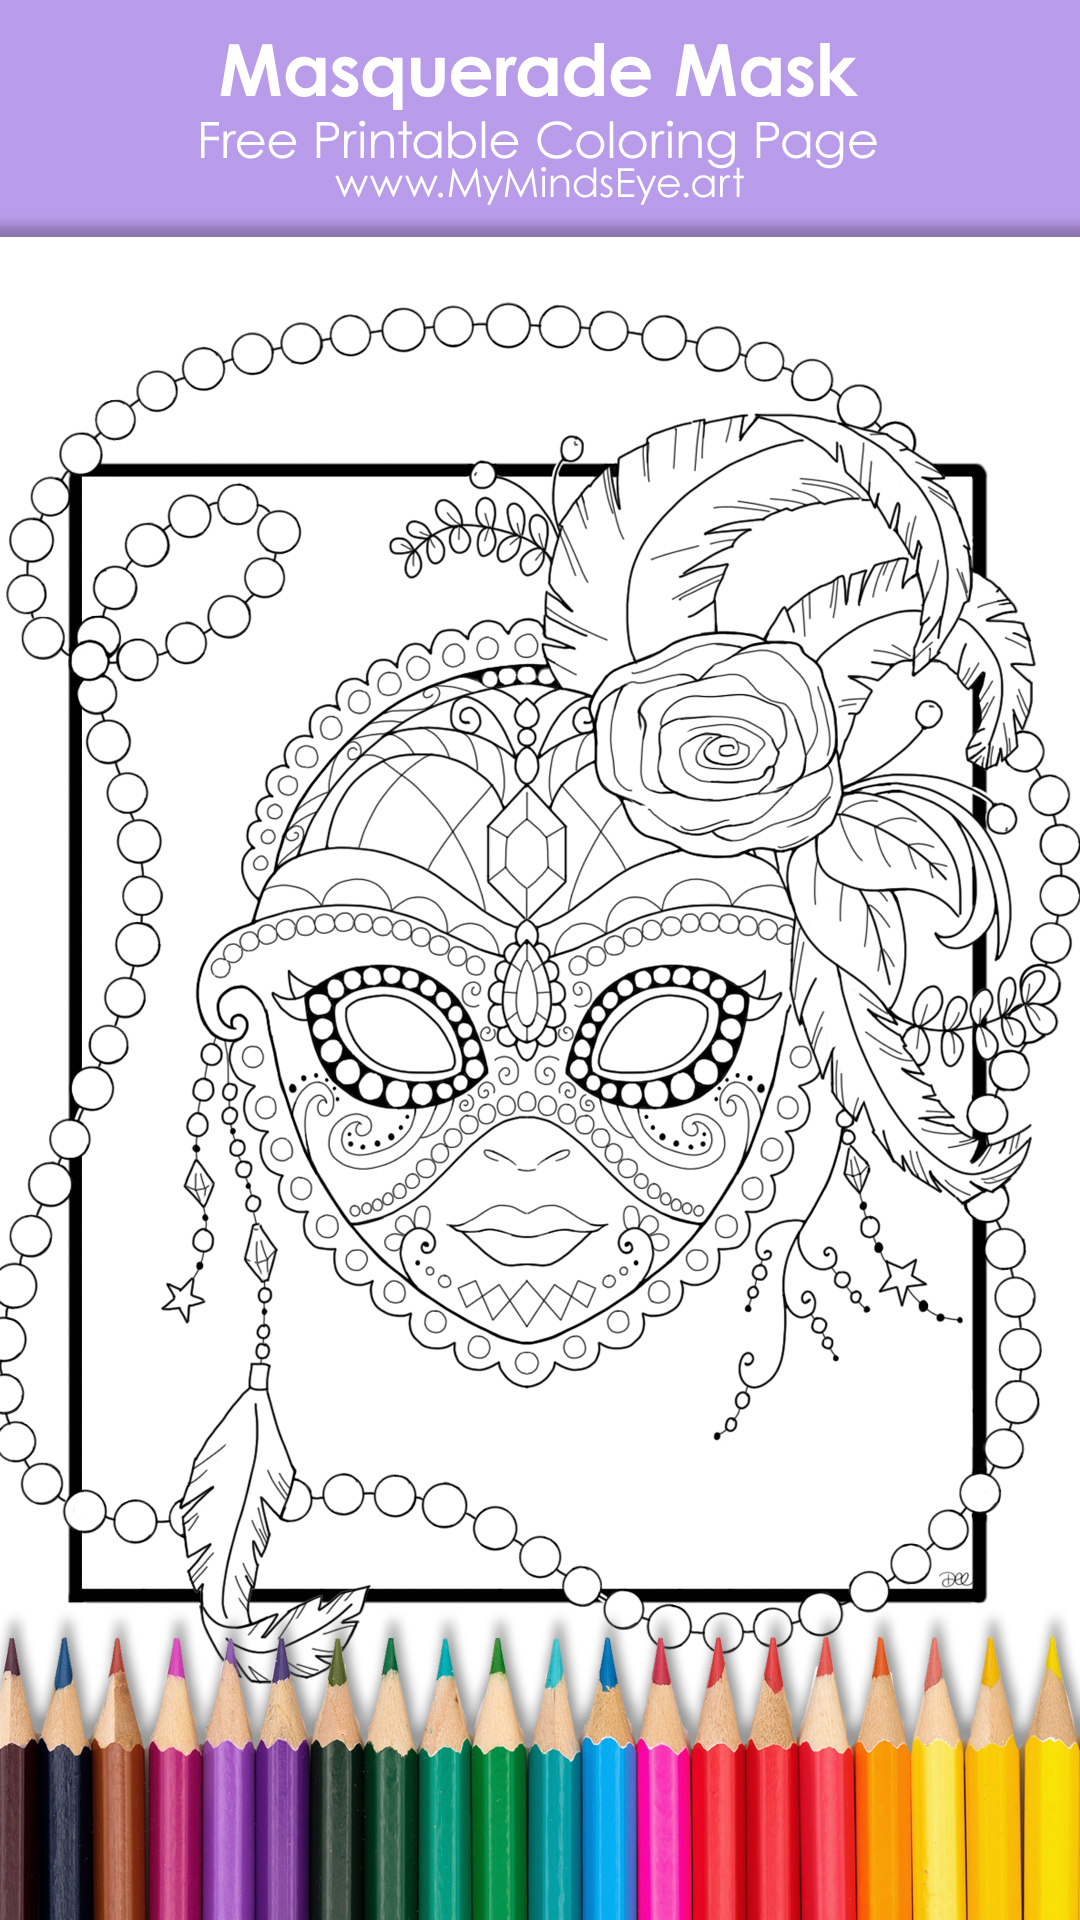 Masquerade Mask Free Printable Coloring Page